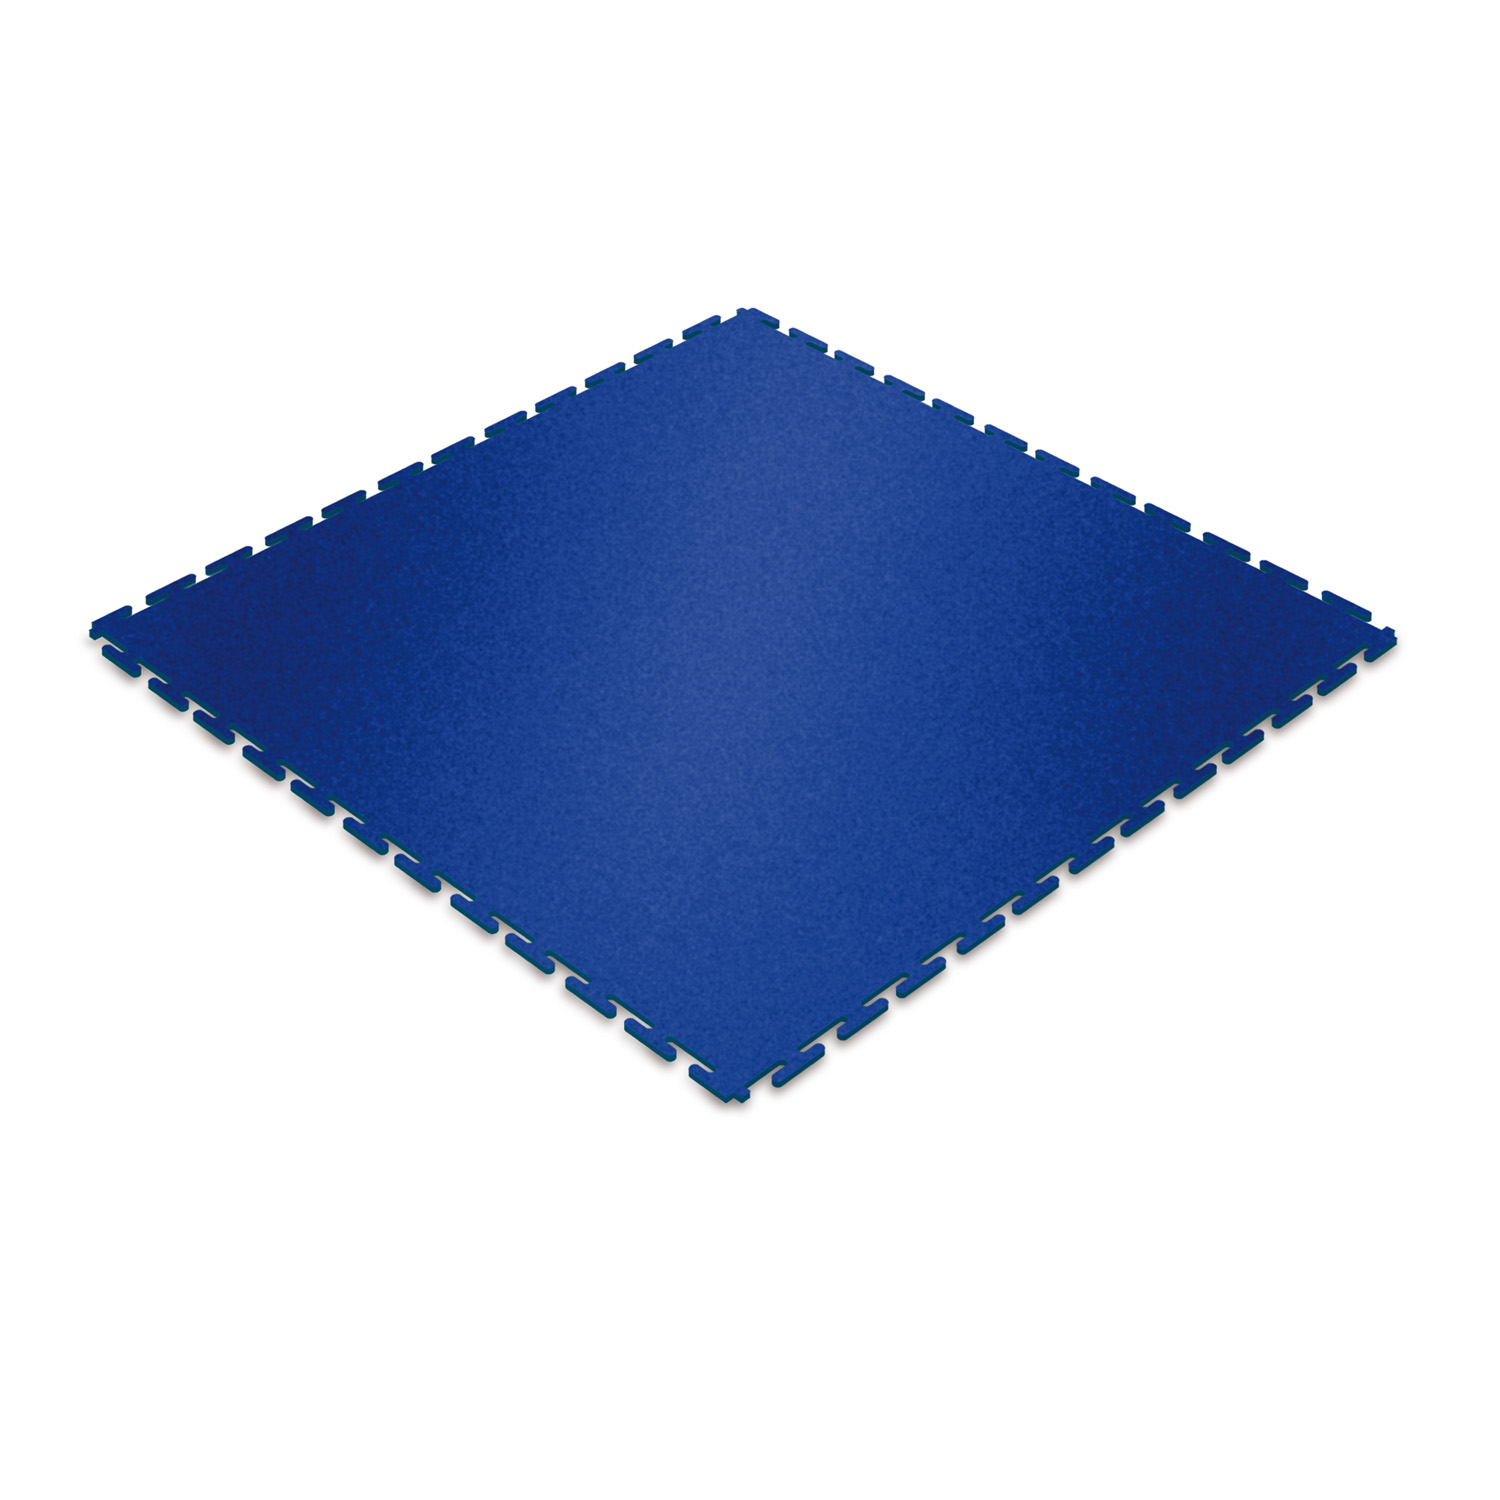 Standard floor tile (blue/textured)